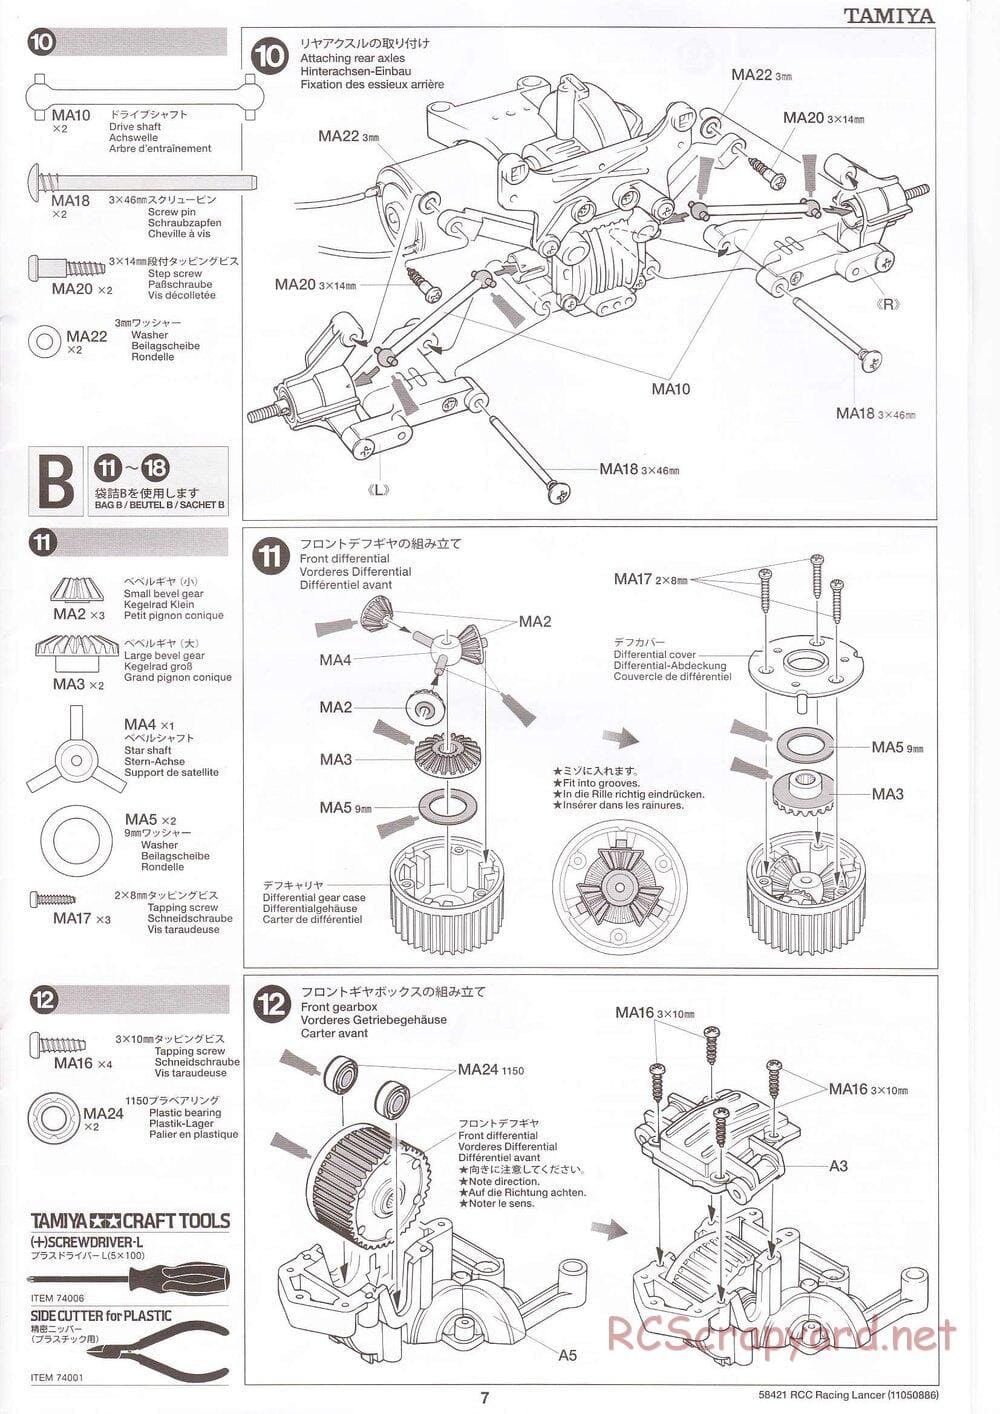 Tamiya - Mitsubishi Racing Lancer - DF-01 Chassis - Manual - Page 7